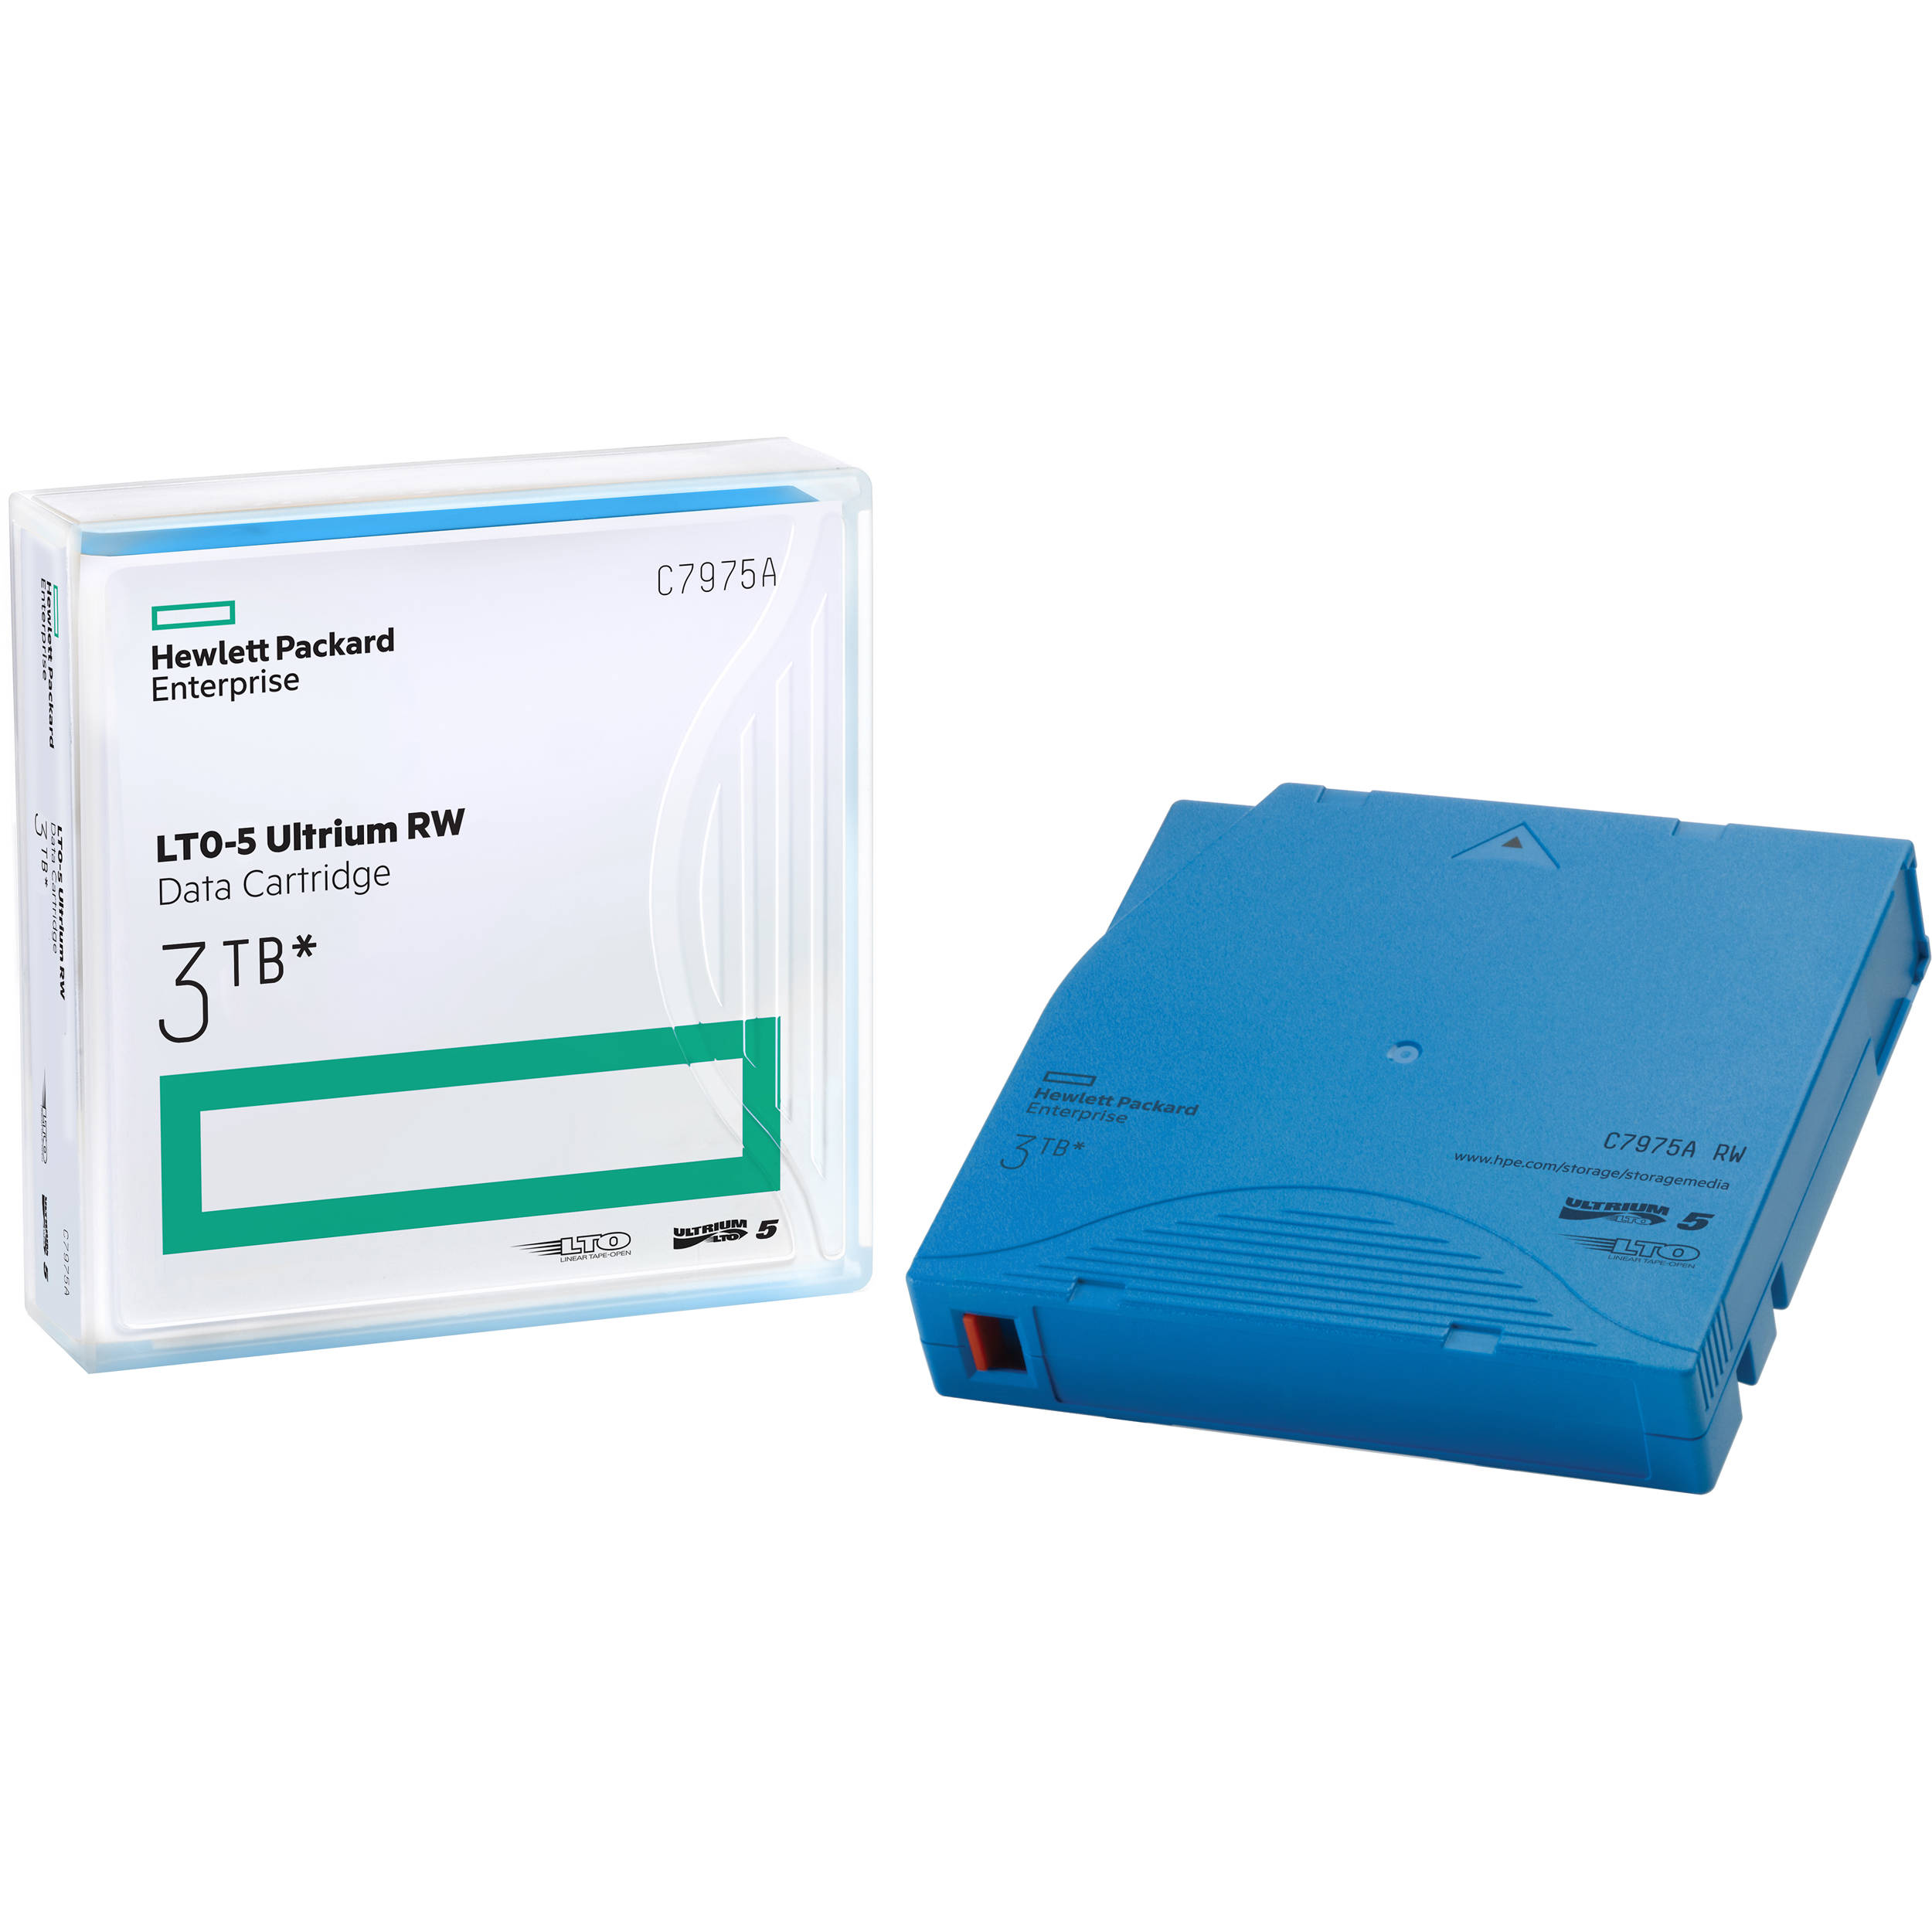 Hewlett Packard Enterprises 3TB LTO-5 Ultrium RW Data Cartridge (Light Blue)